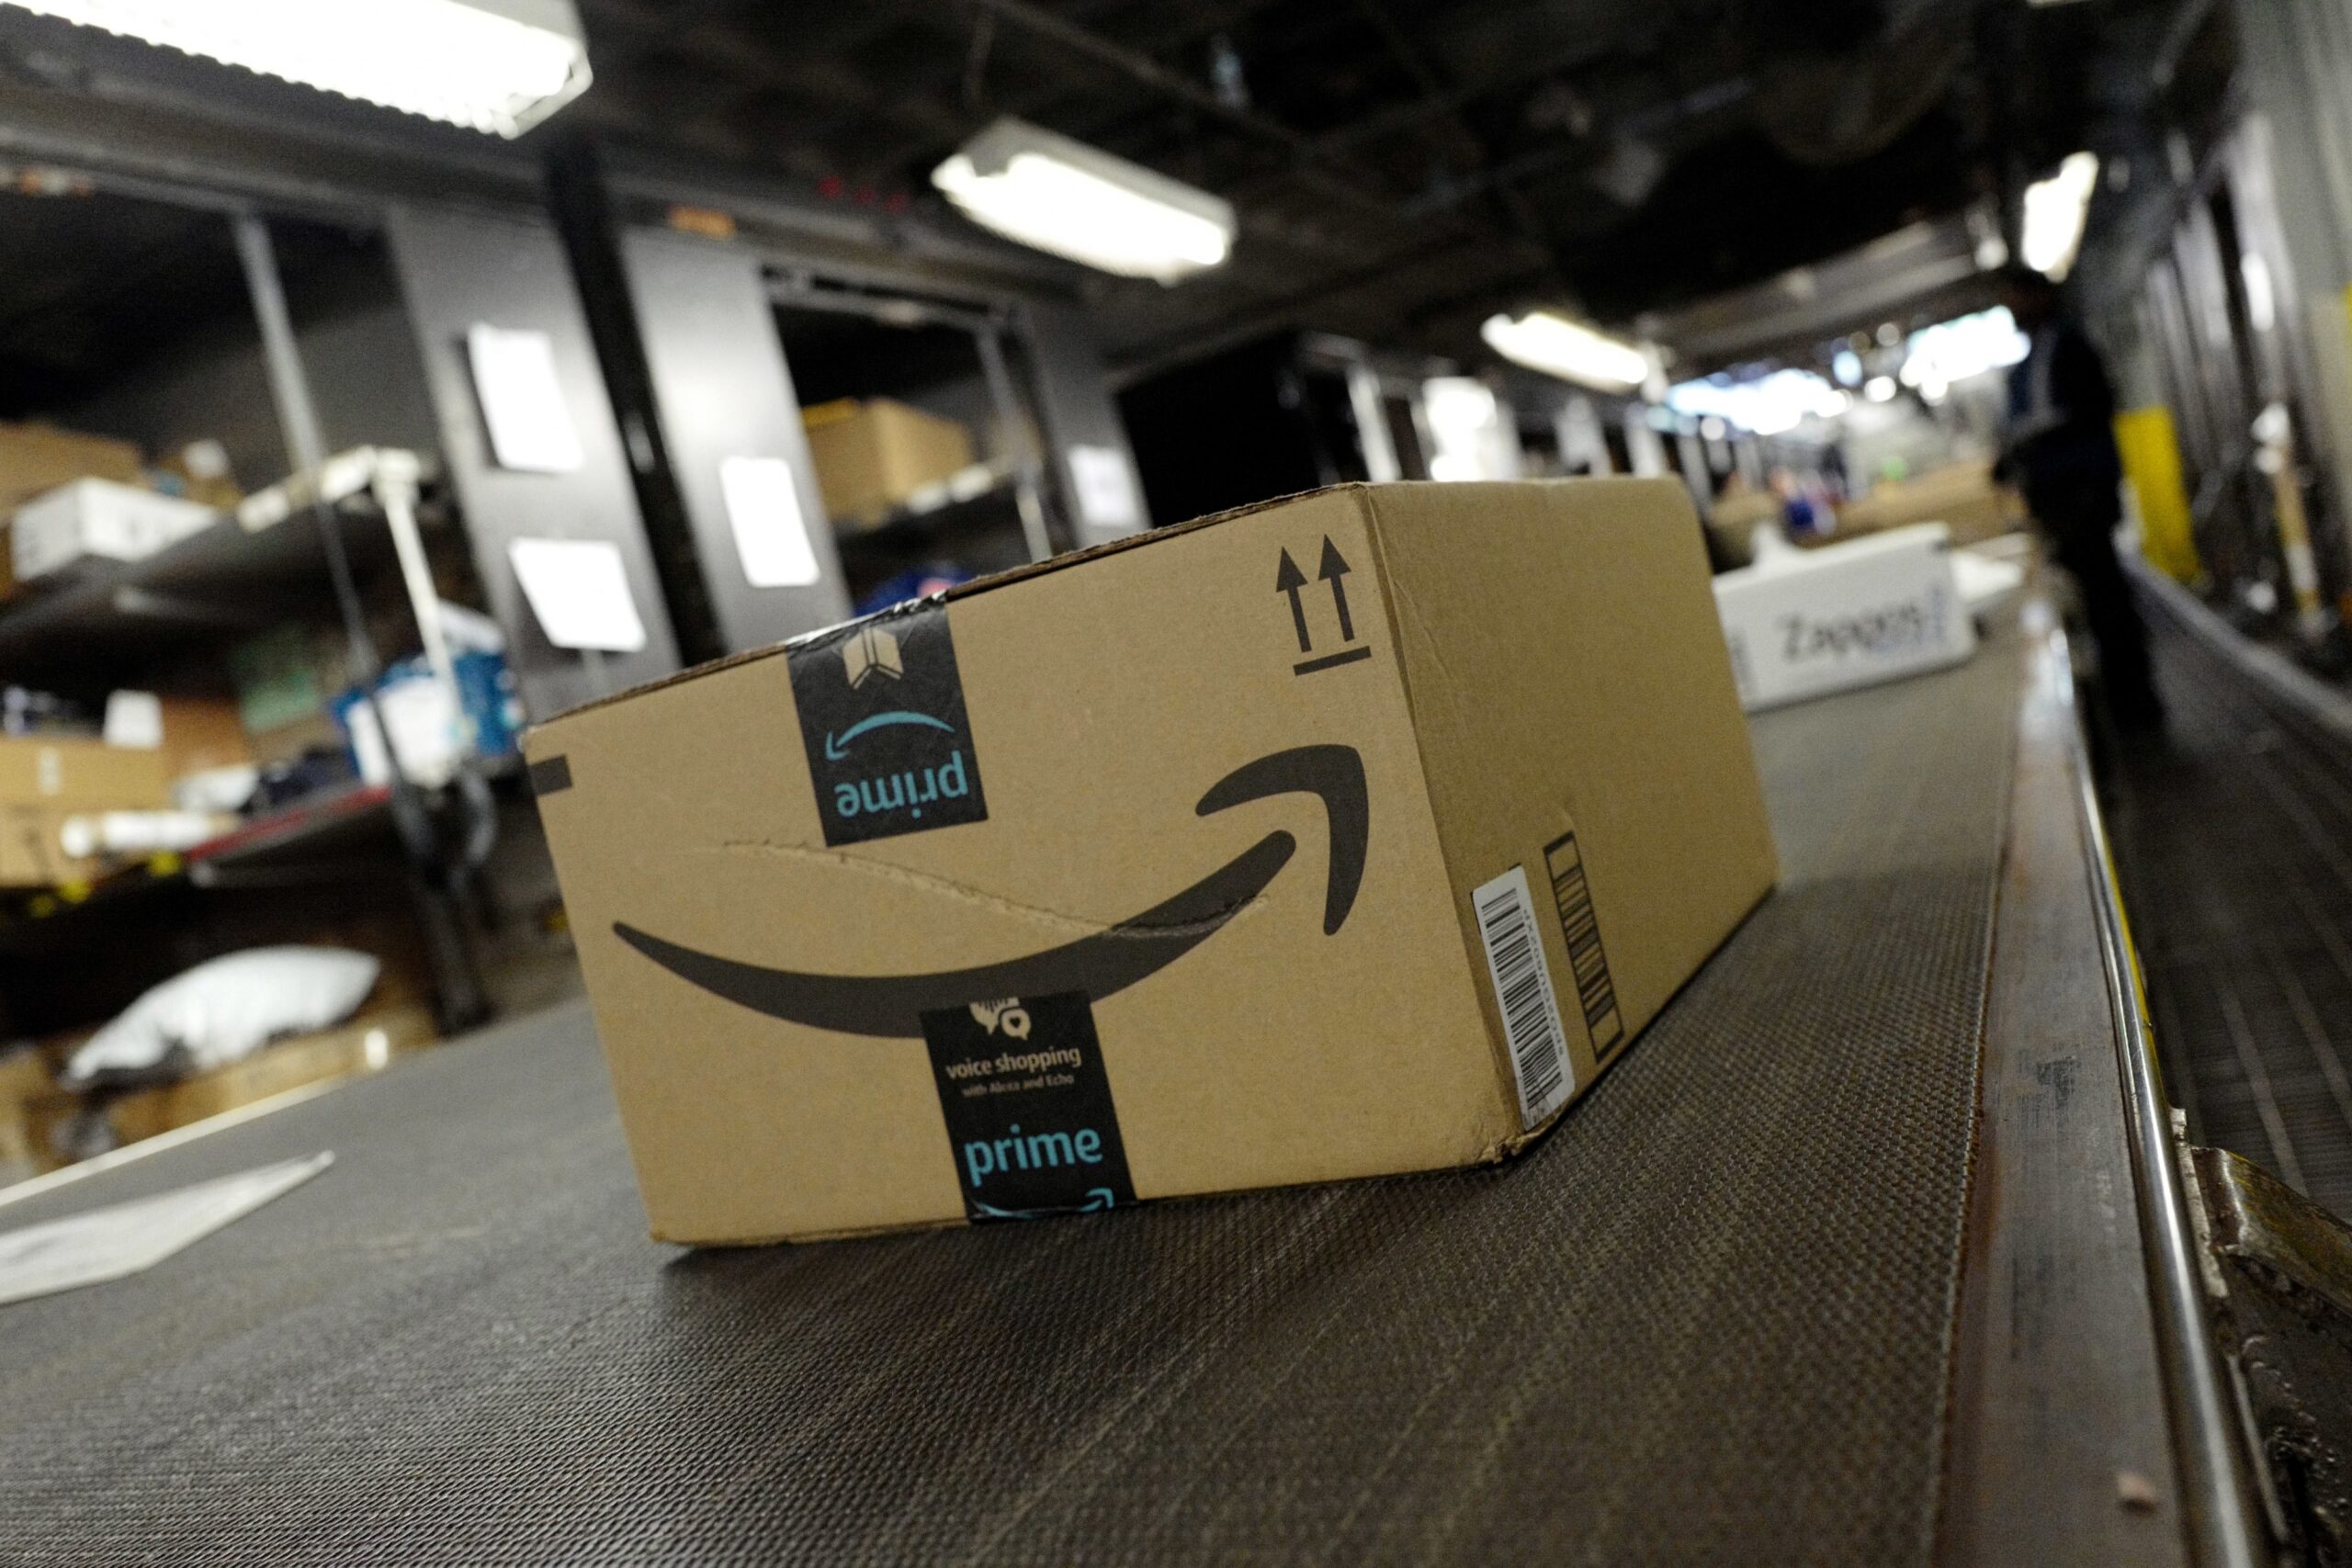 Amazon box on a conveyor belt